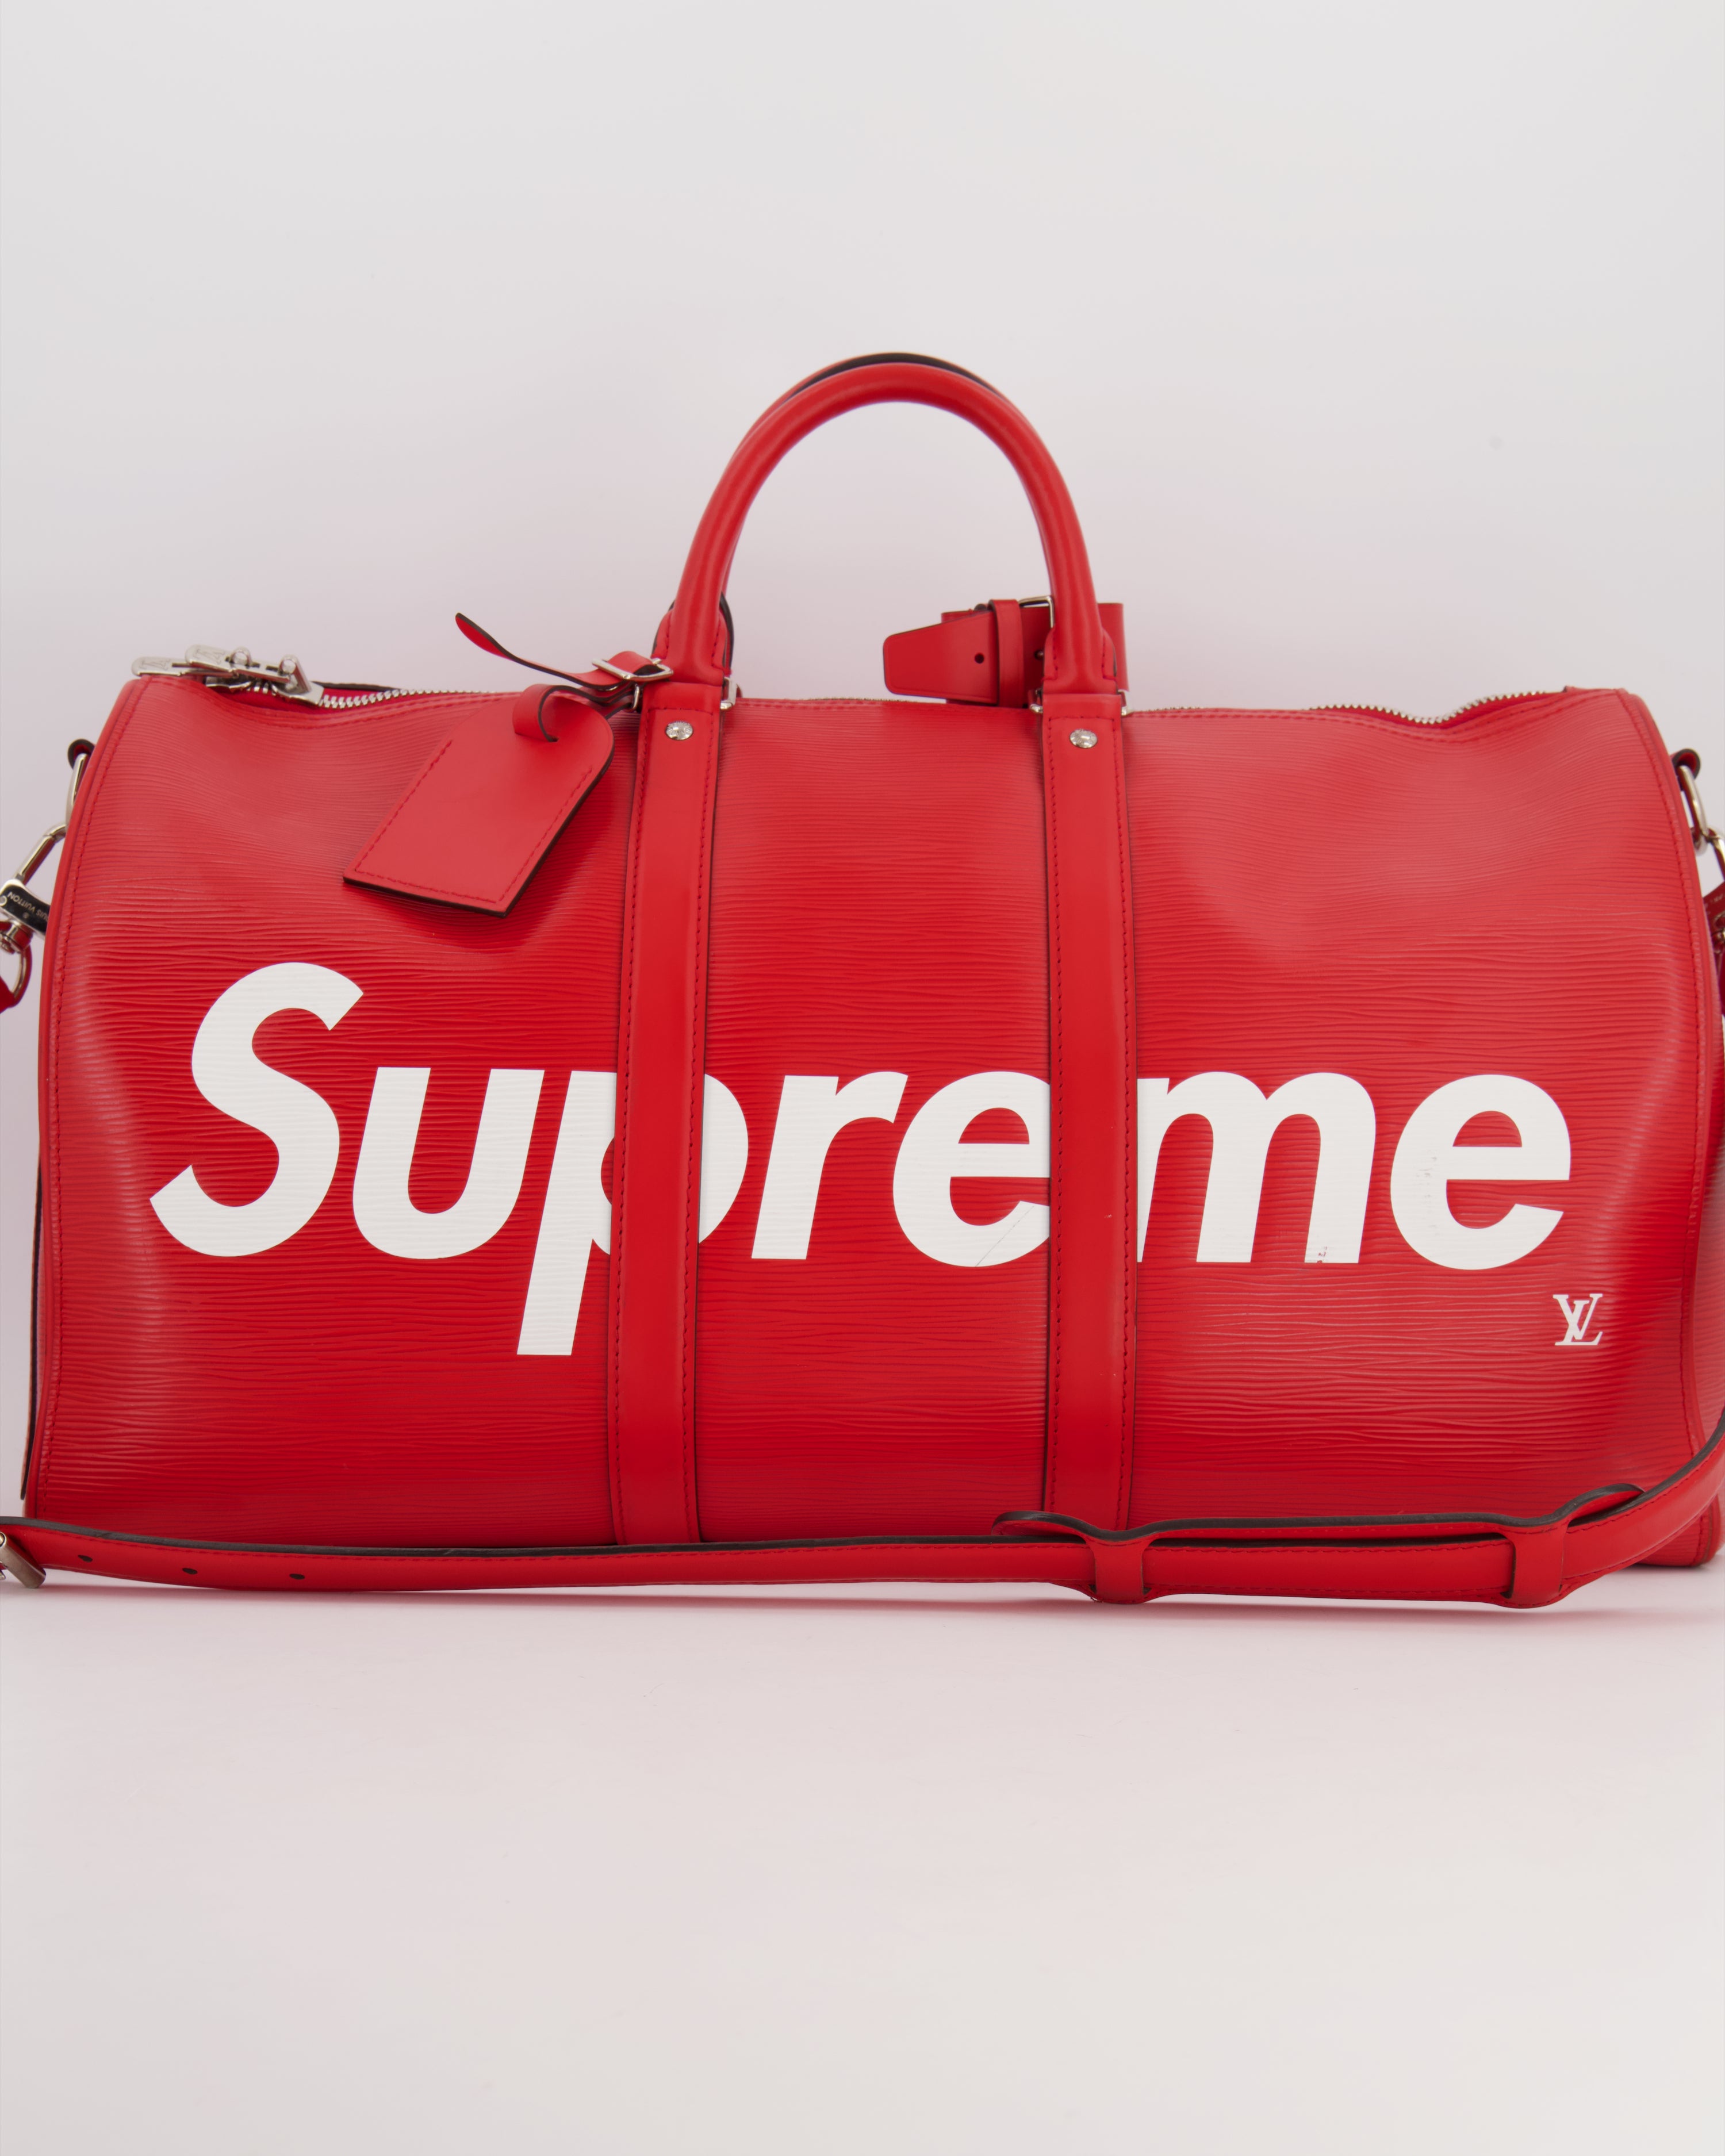 Supreme Black Louis Vuitton Duffle Bag  On The Arm